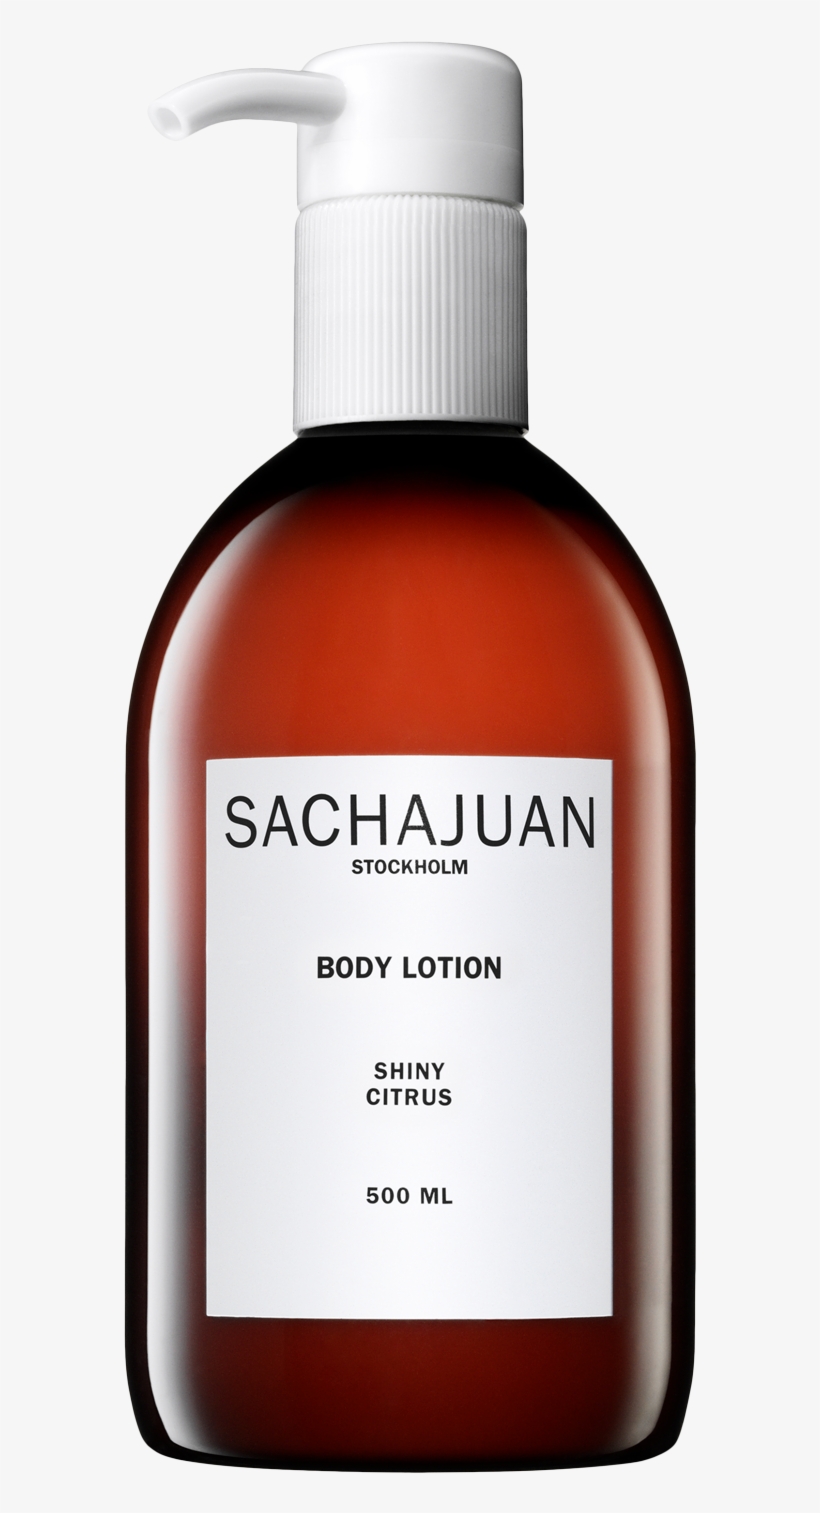 Body Lotion Shiny Citrus - Sacha Juan Body Lotion, transparent png #9437887